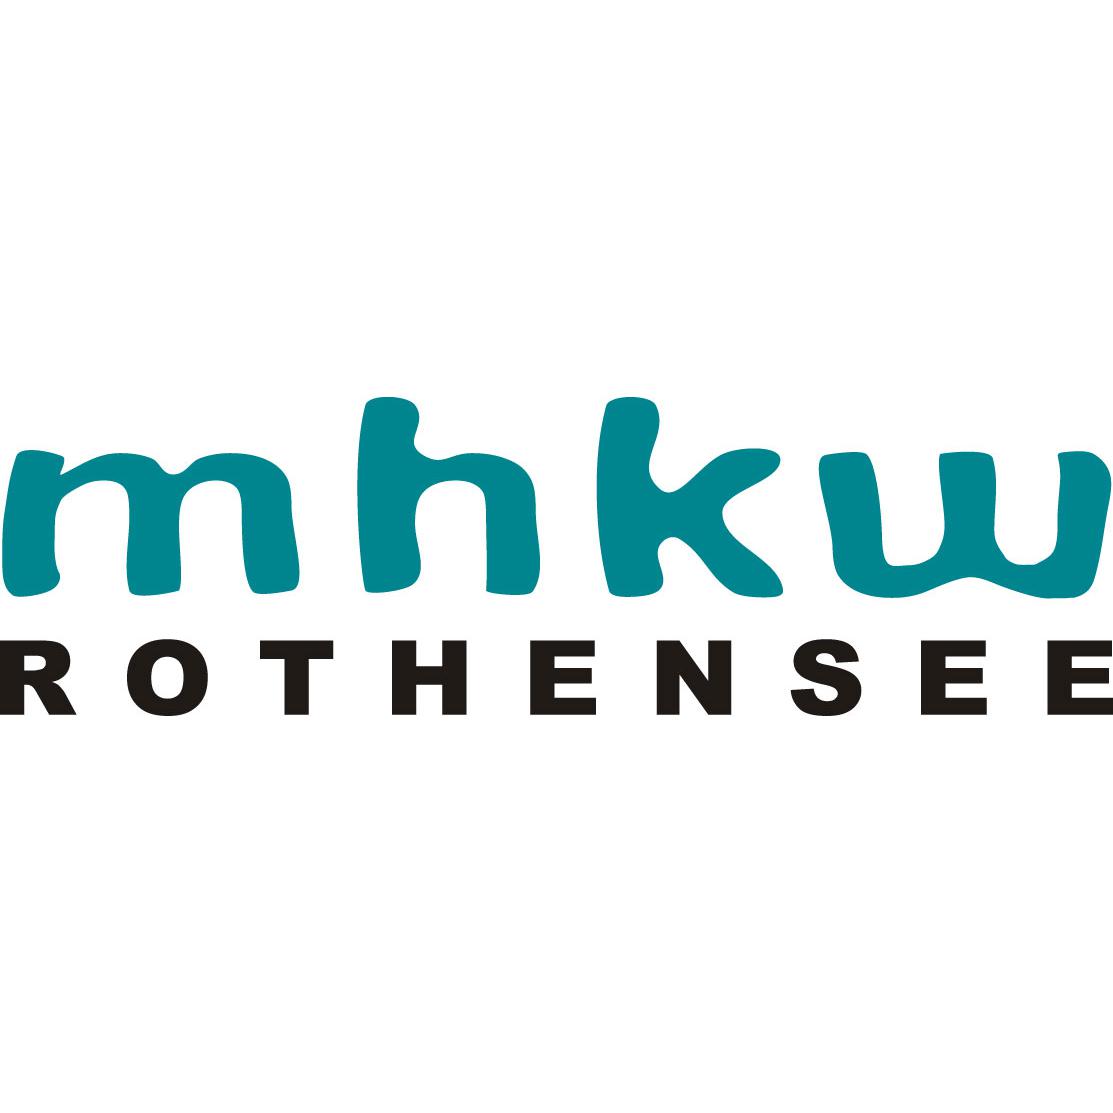 MHKW Rothensee GmbH Logo